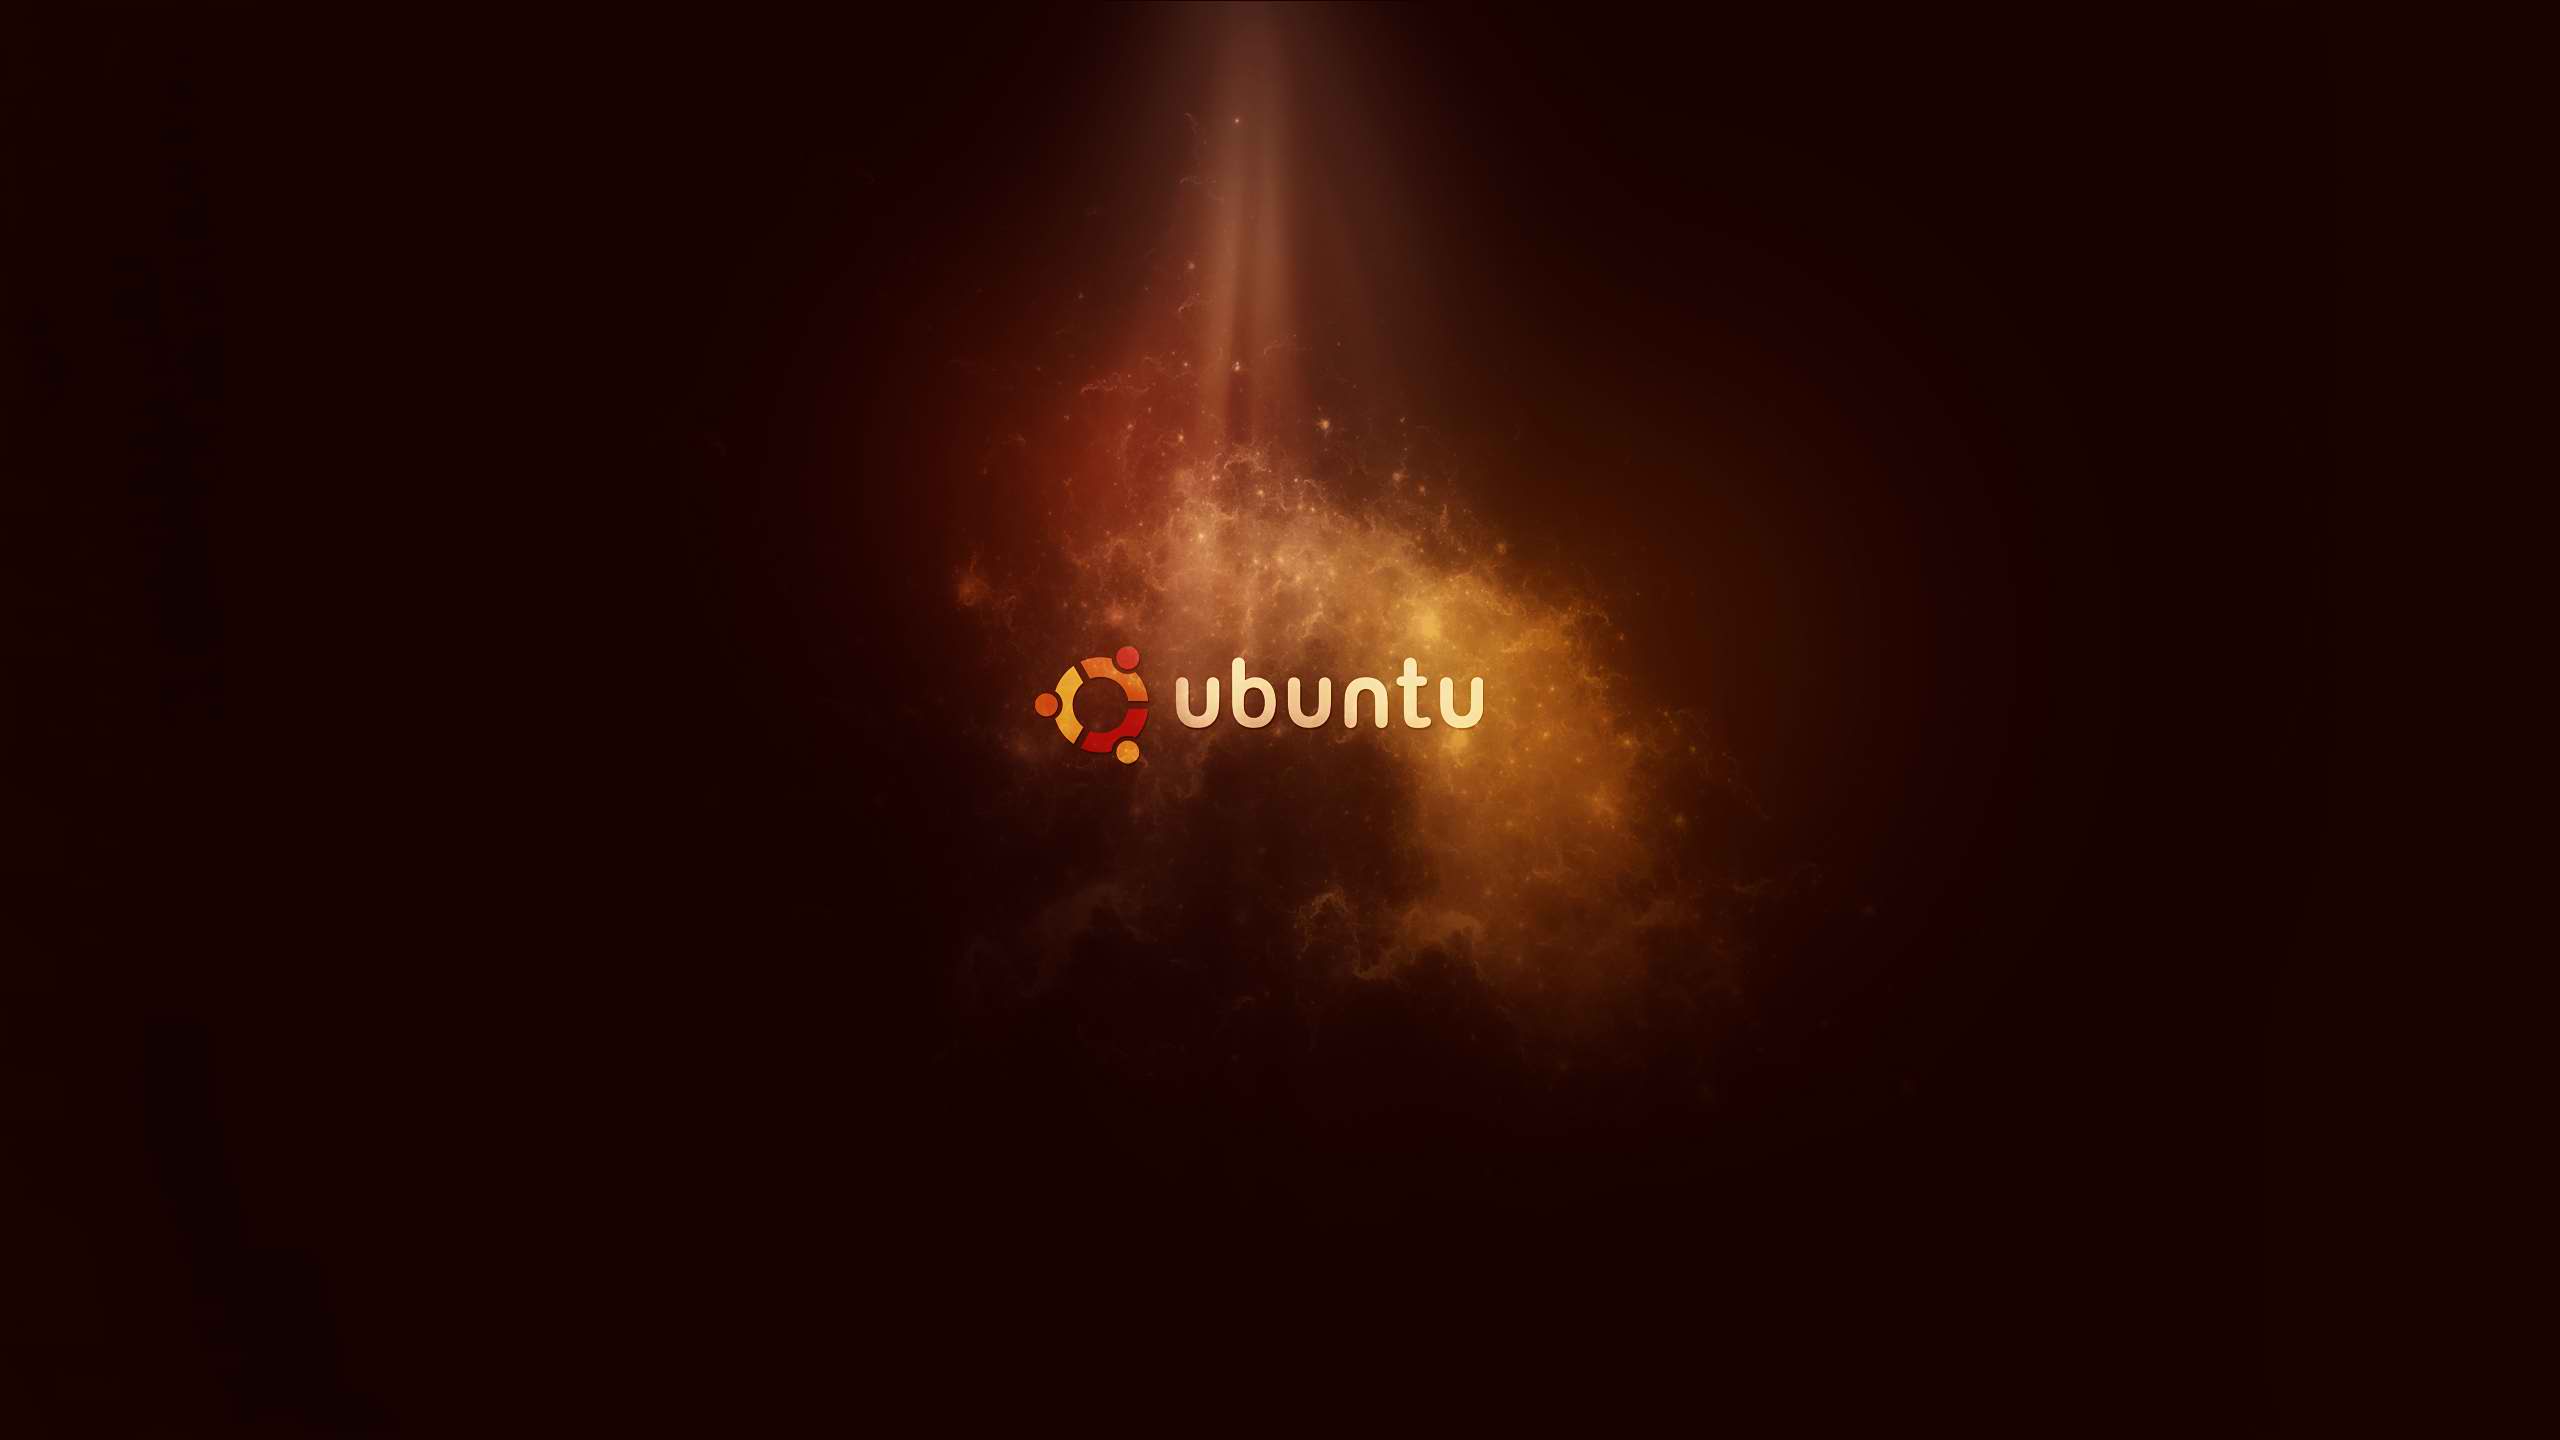 Linux Ubuntu Background Wallpaper 2237 Best Wallpapers Linux Ubuntu 2560x1440